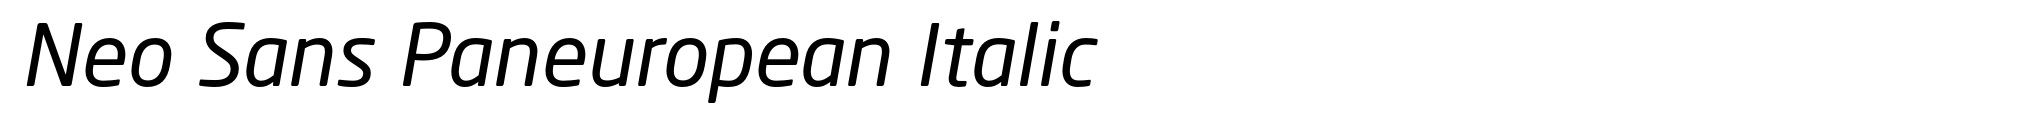 Neo Sans Paneuropean Italic image